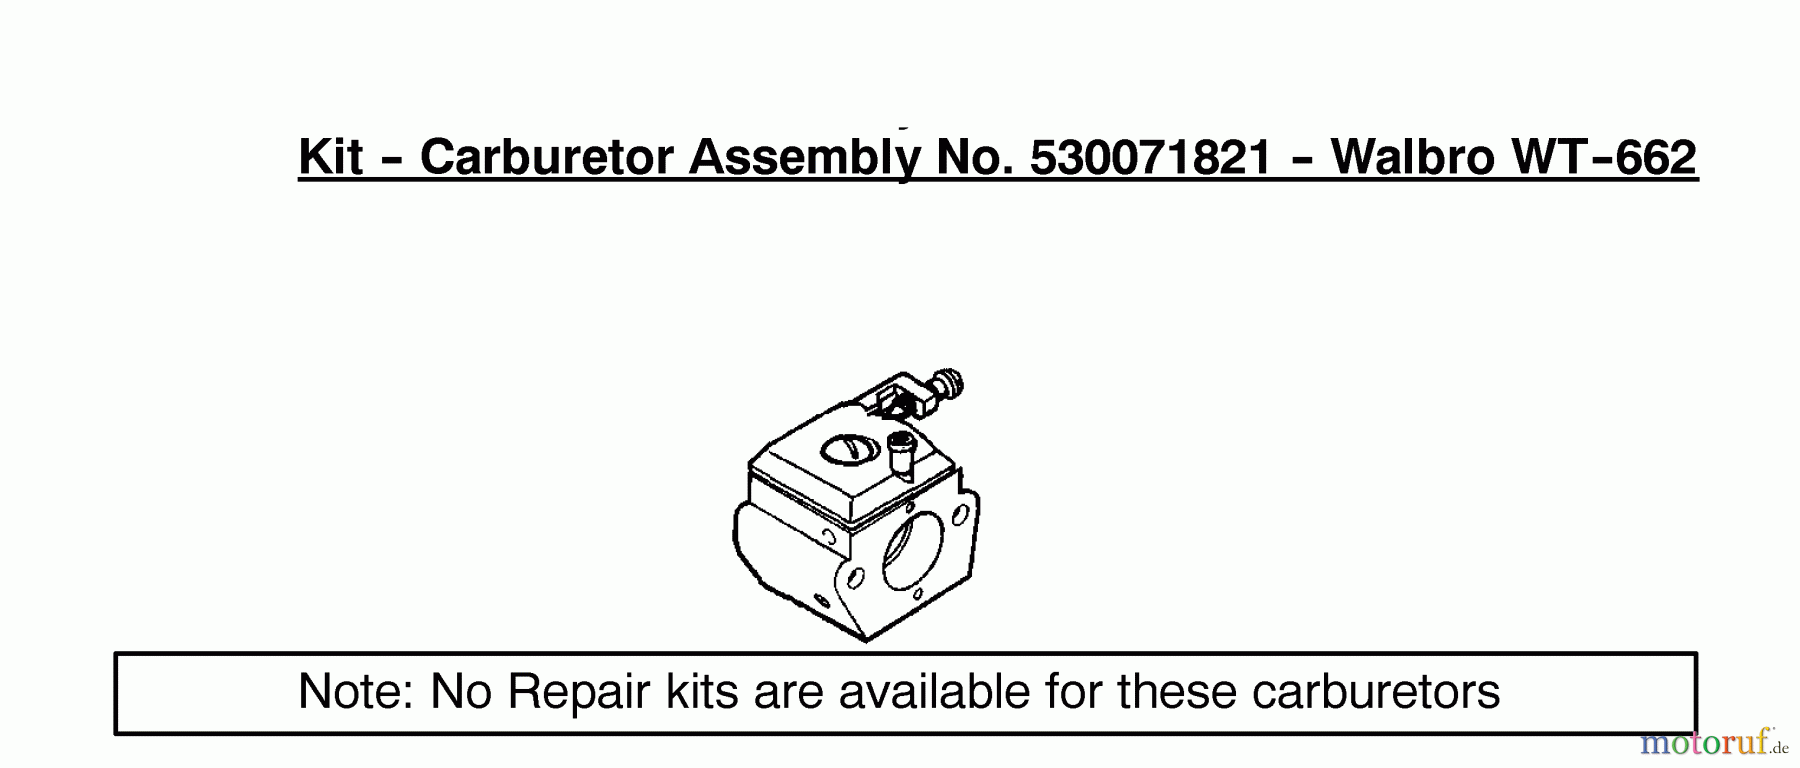  Poulan / Weed Eater Motorsägen 2550LE (Type 1) - Poulan Woodmaster Chainsaw Carburetor Assembly Kit (Walbro WT-662) 530071821